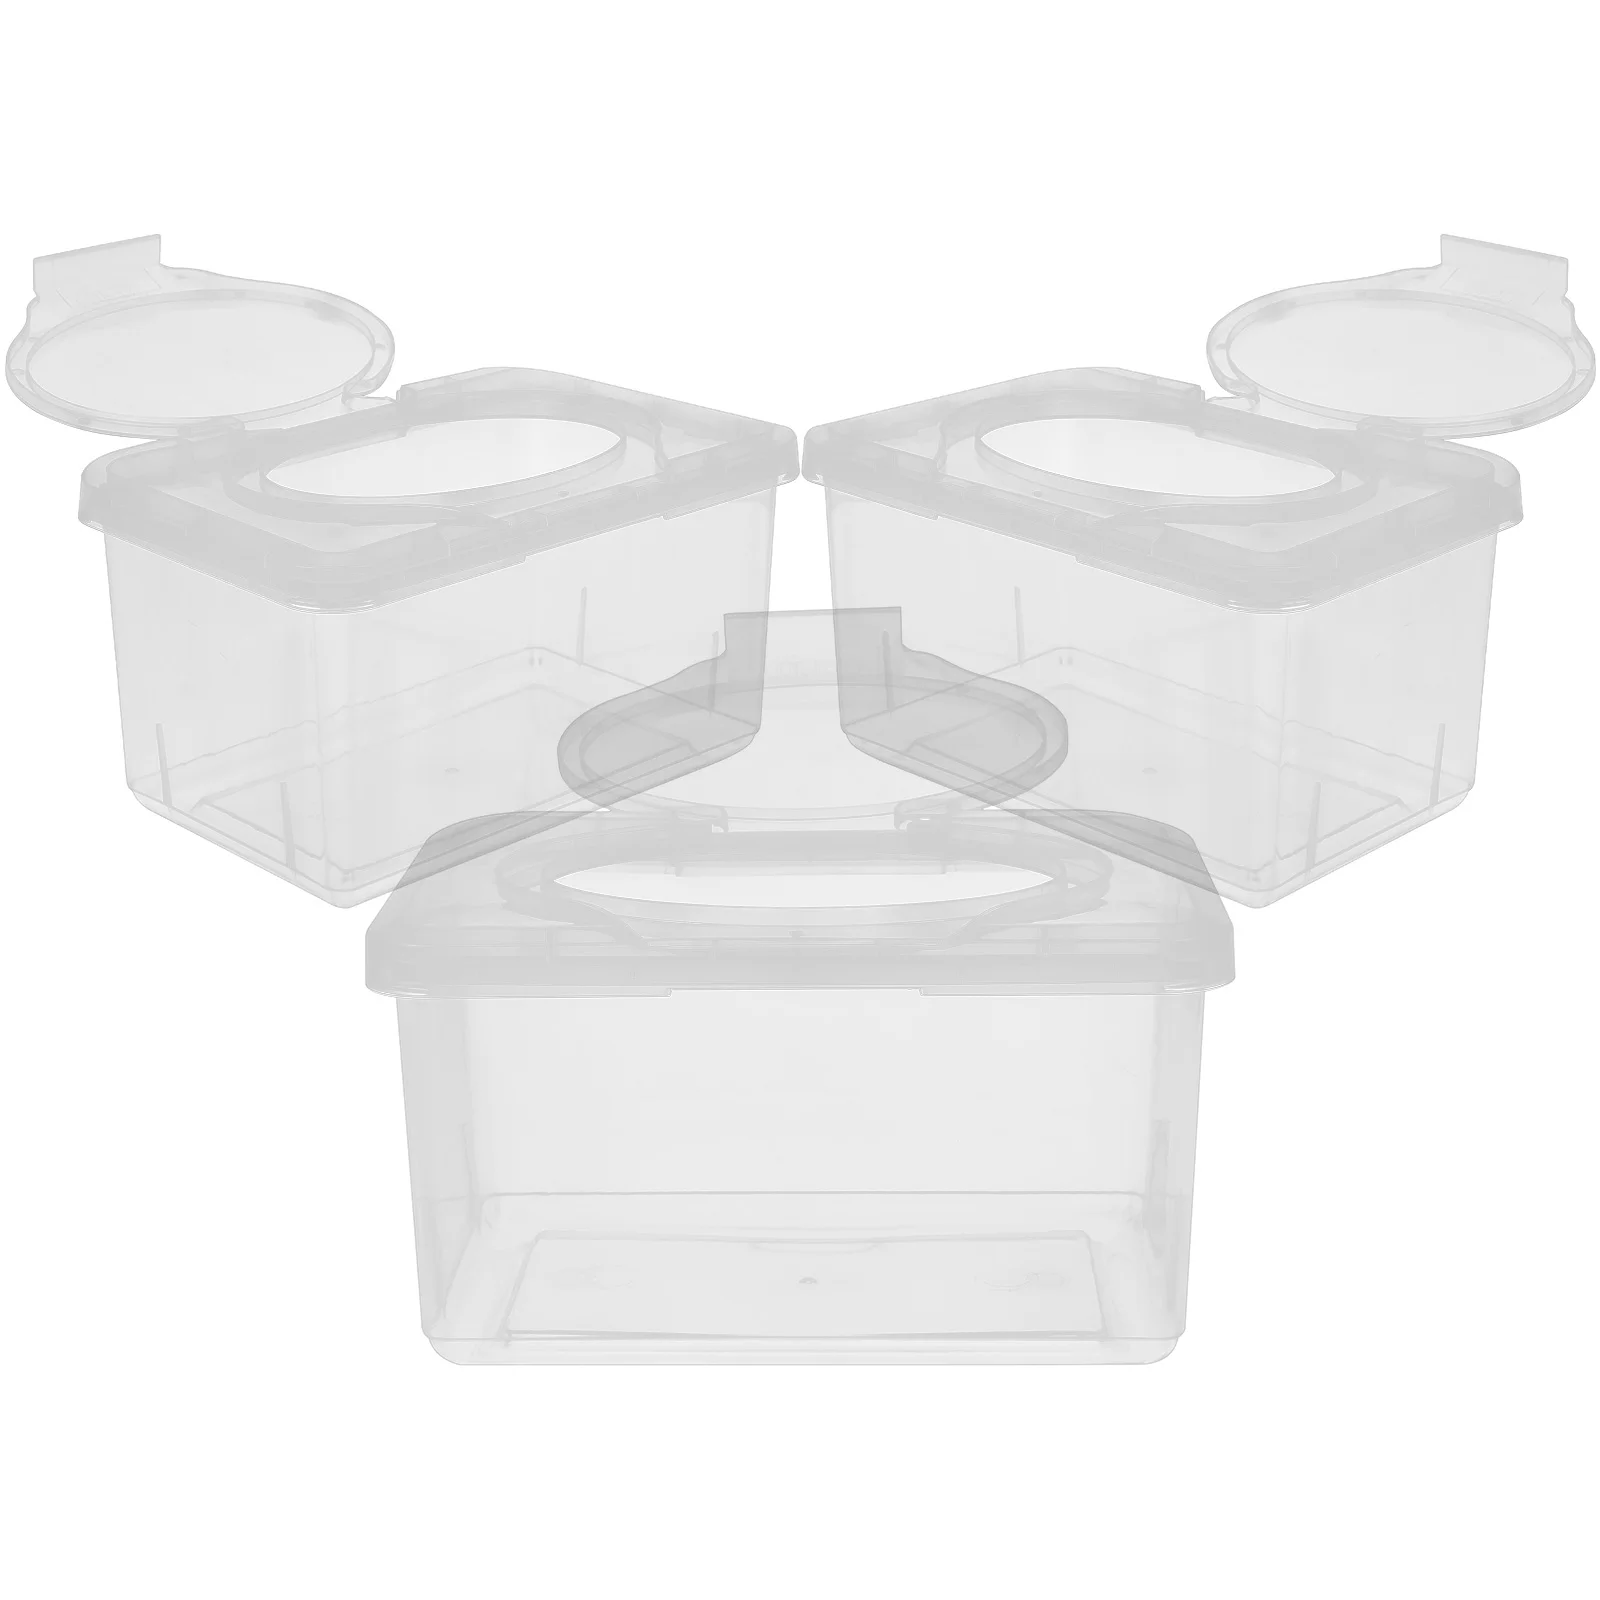 

3 Pcs Baby Wipes Box Pram Infant Case Household Wet Tissue Holder Pp Container Small